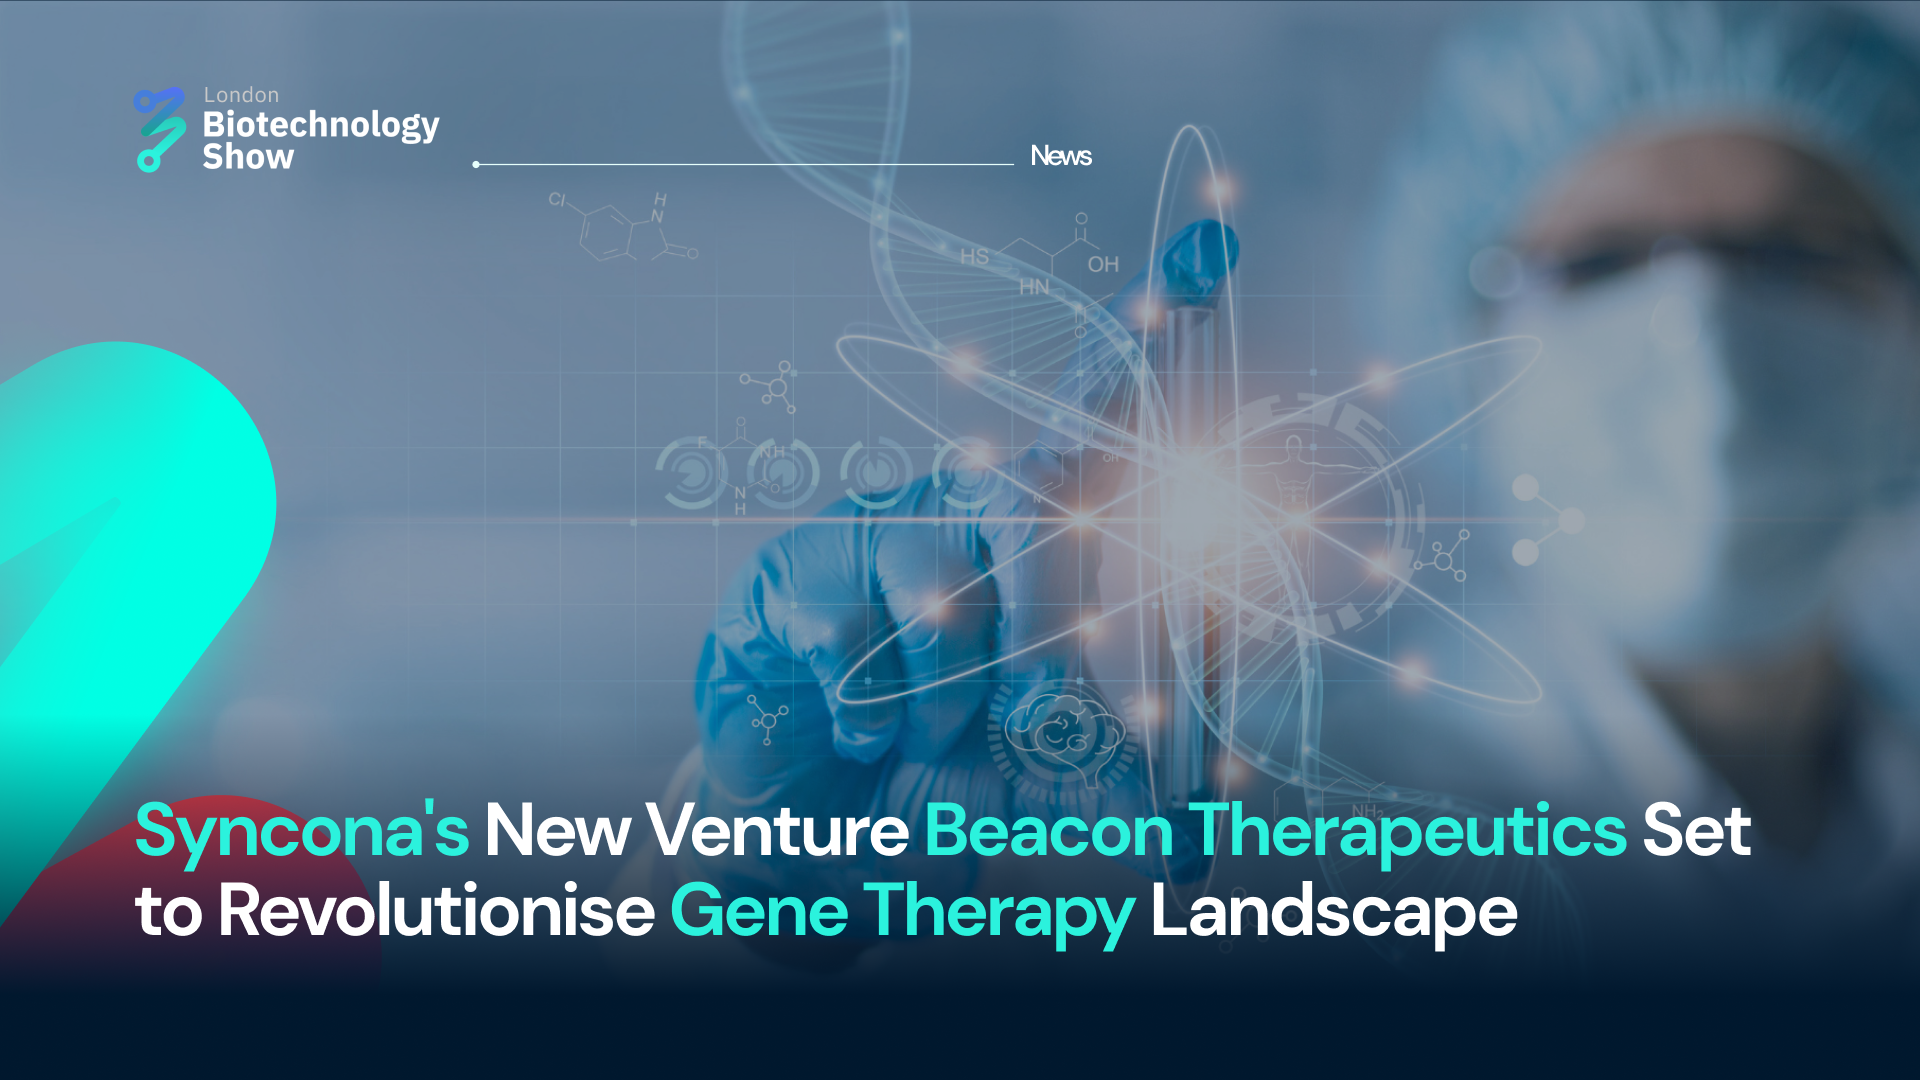 Syncona's New Venture Beacon Therapeutics Set to Revolutionise Gene Therapy Landscape